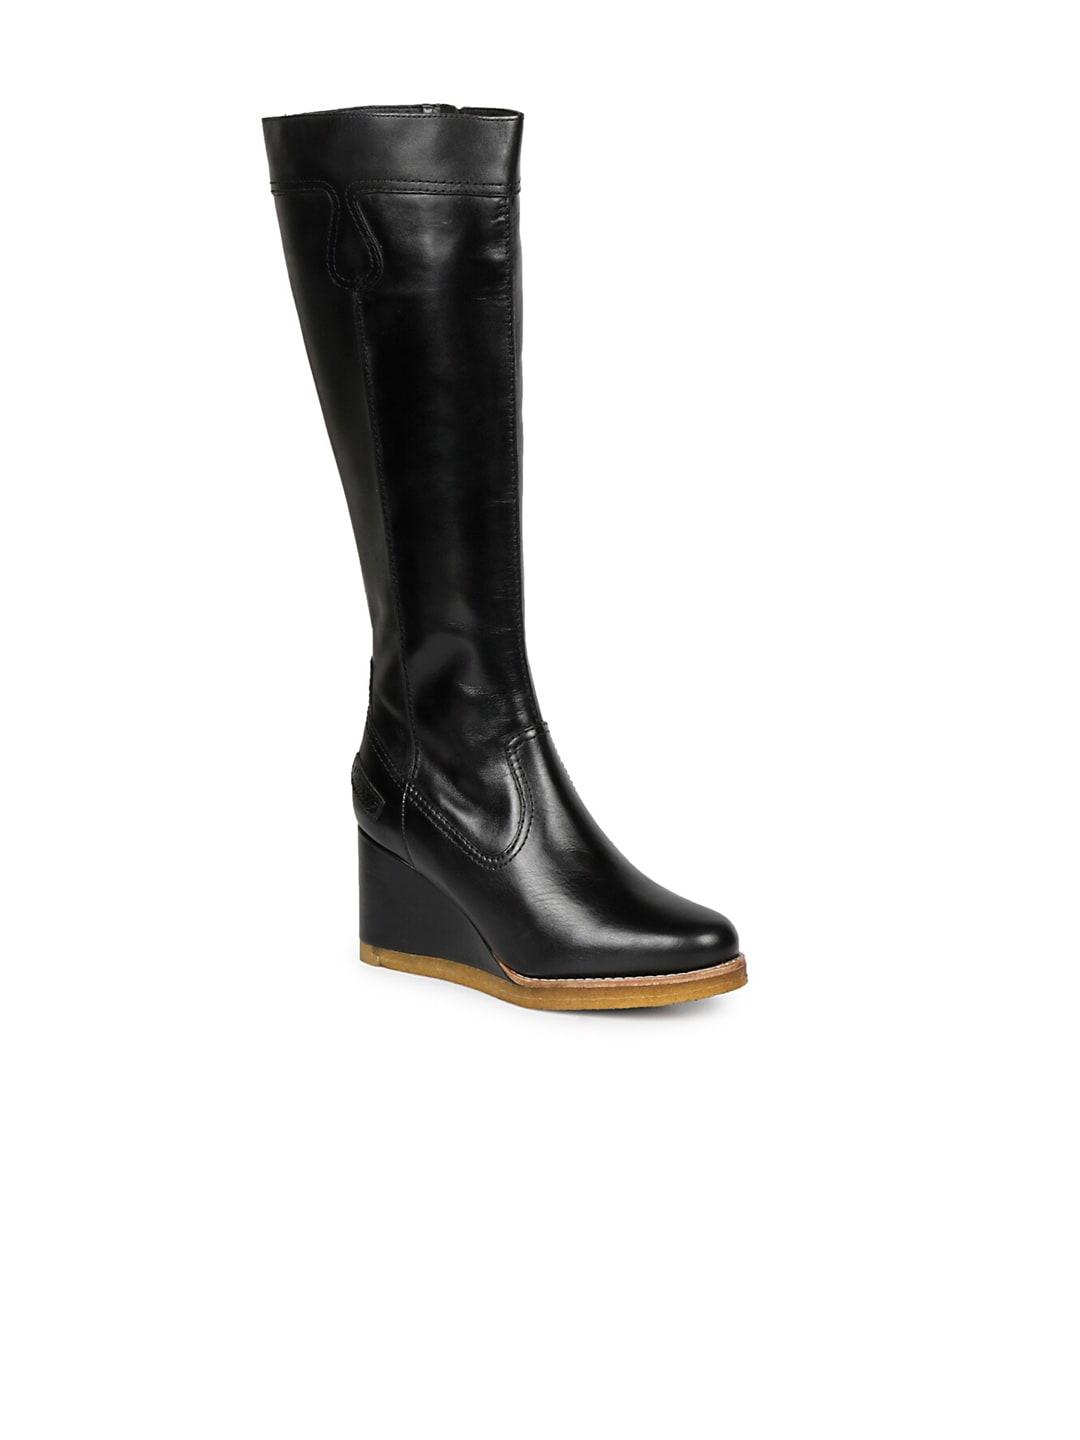 saint-g-women-leather-long-winter-boots